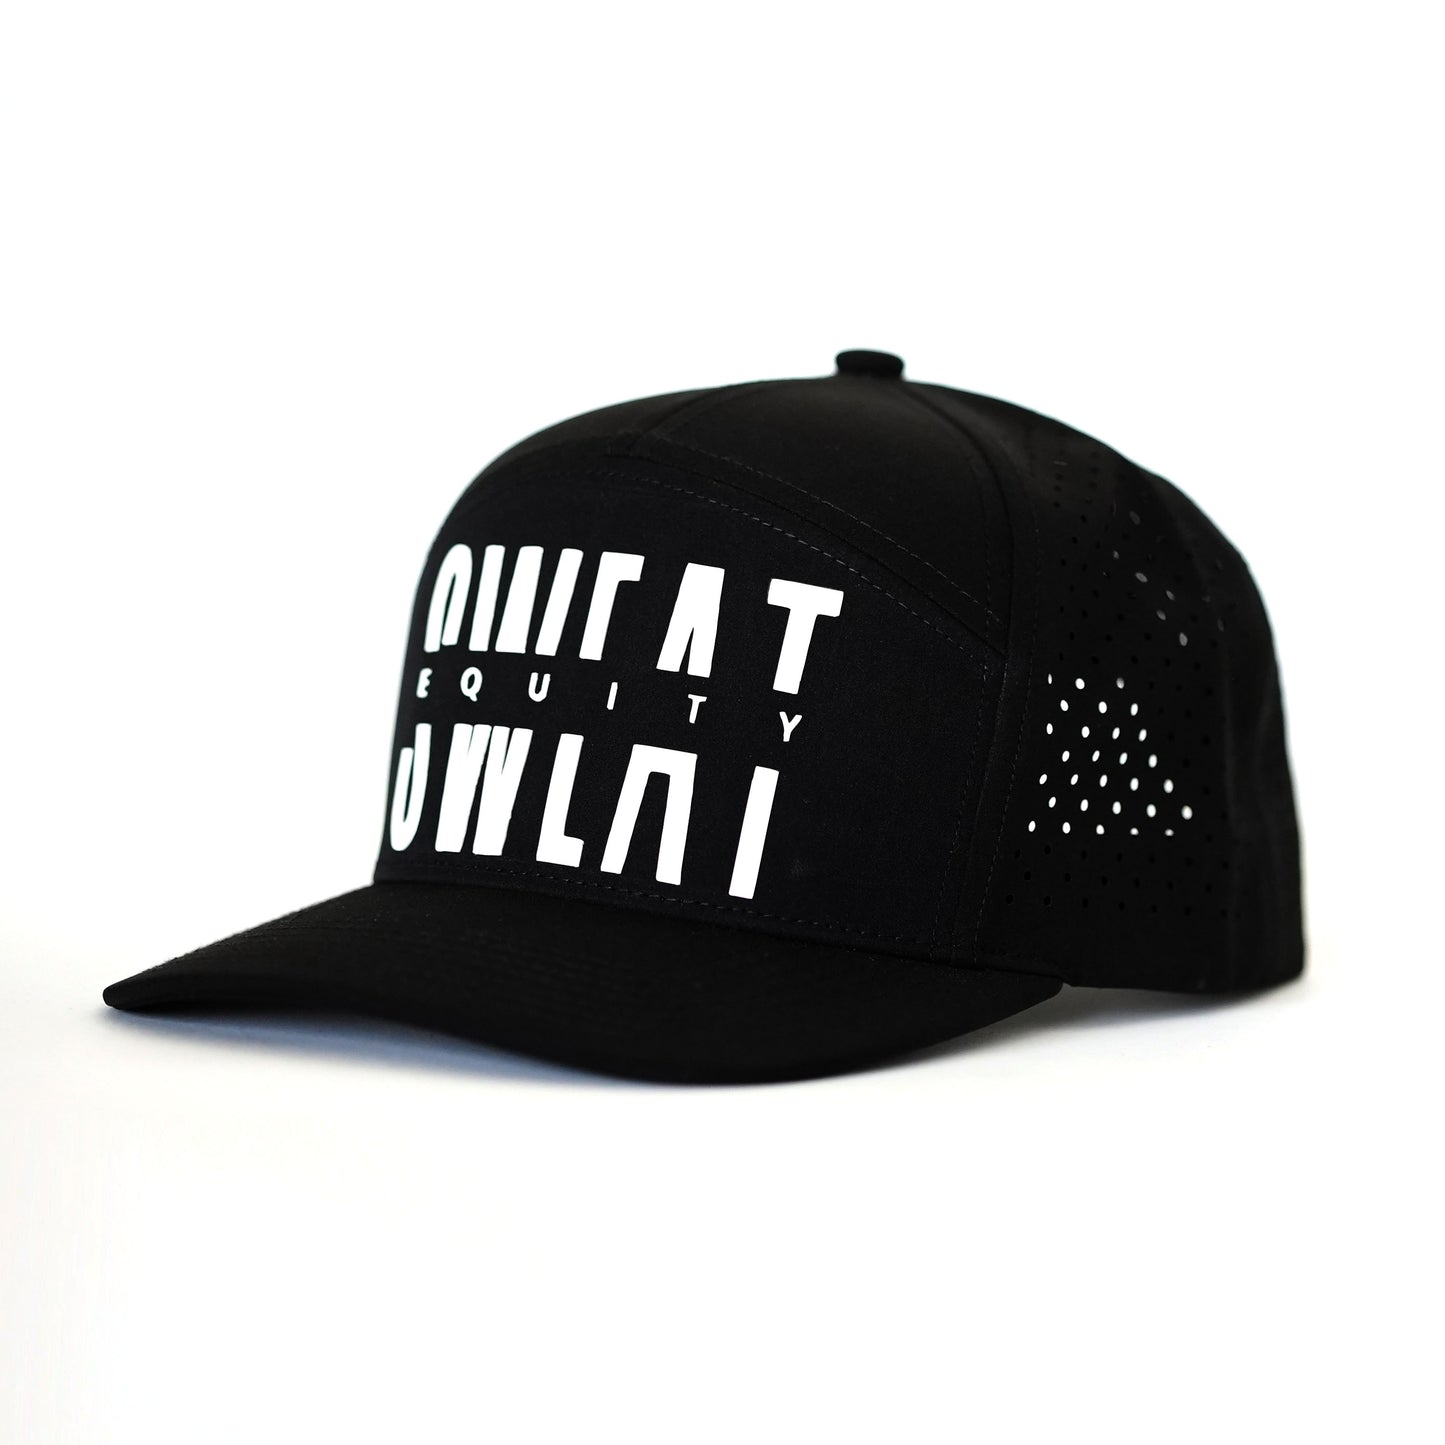 Sweat Equity LB Hat